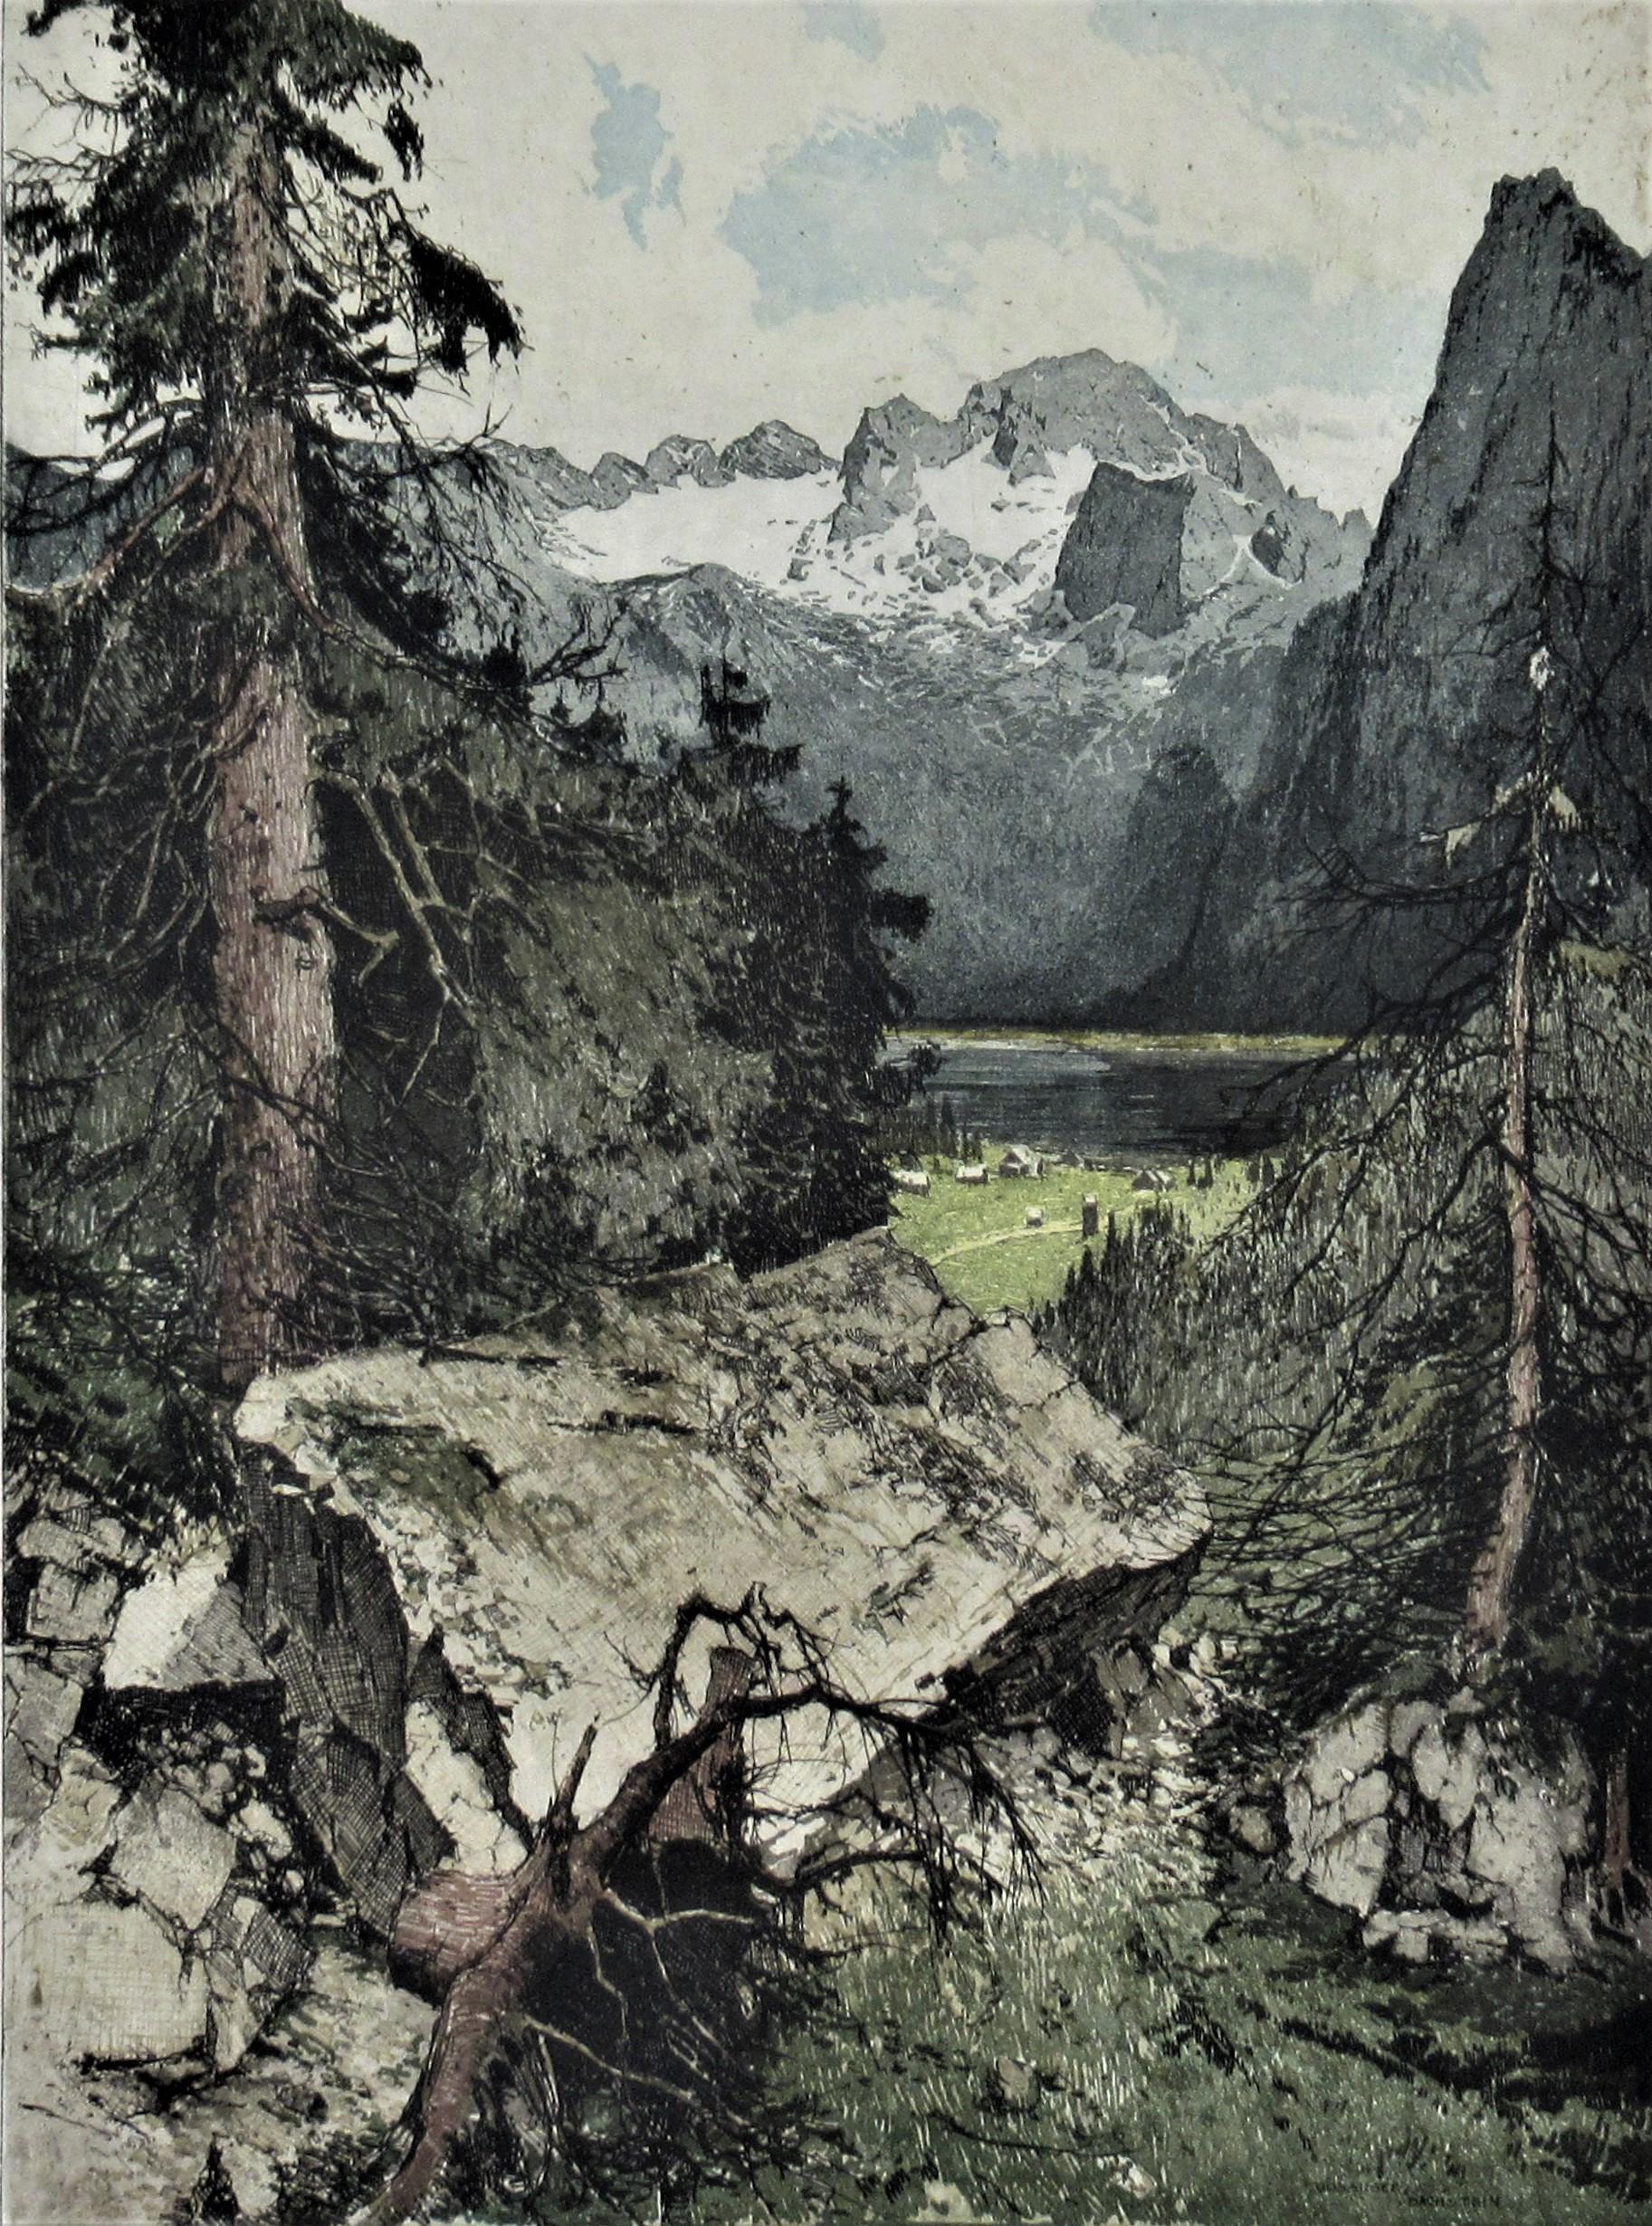 Dachstein View, Mountain Pine, Austria - Print by Josef Eidenberger